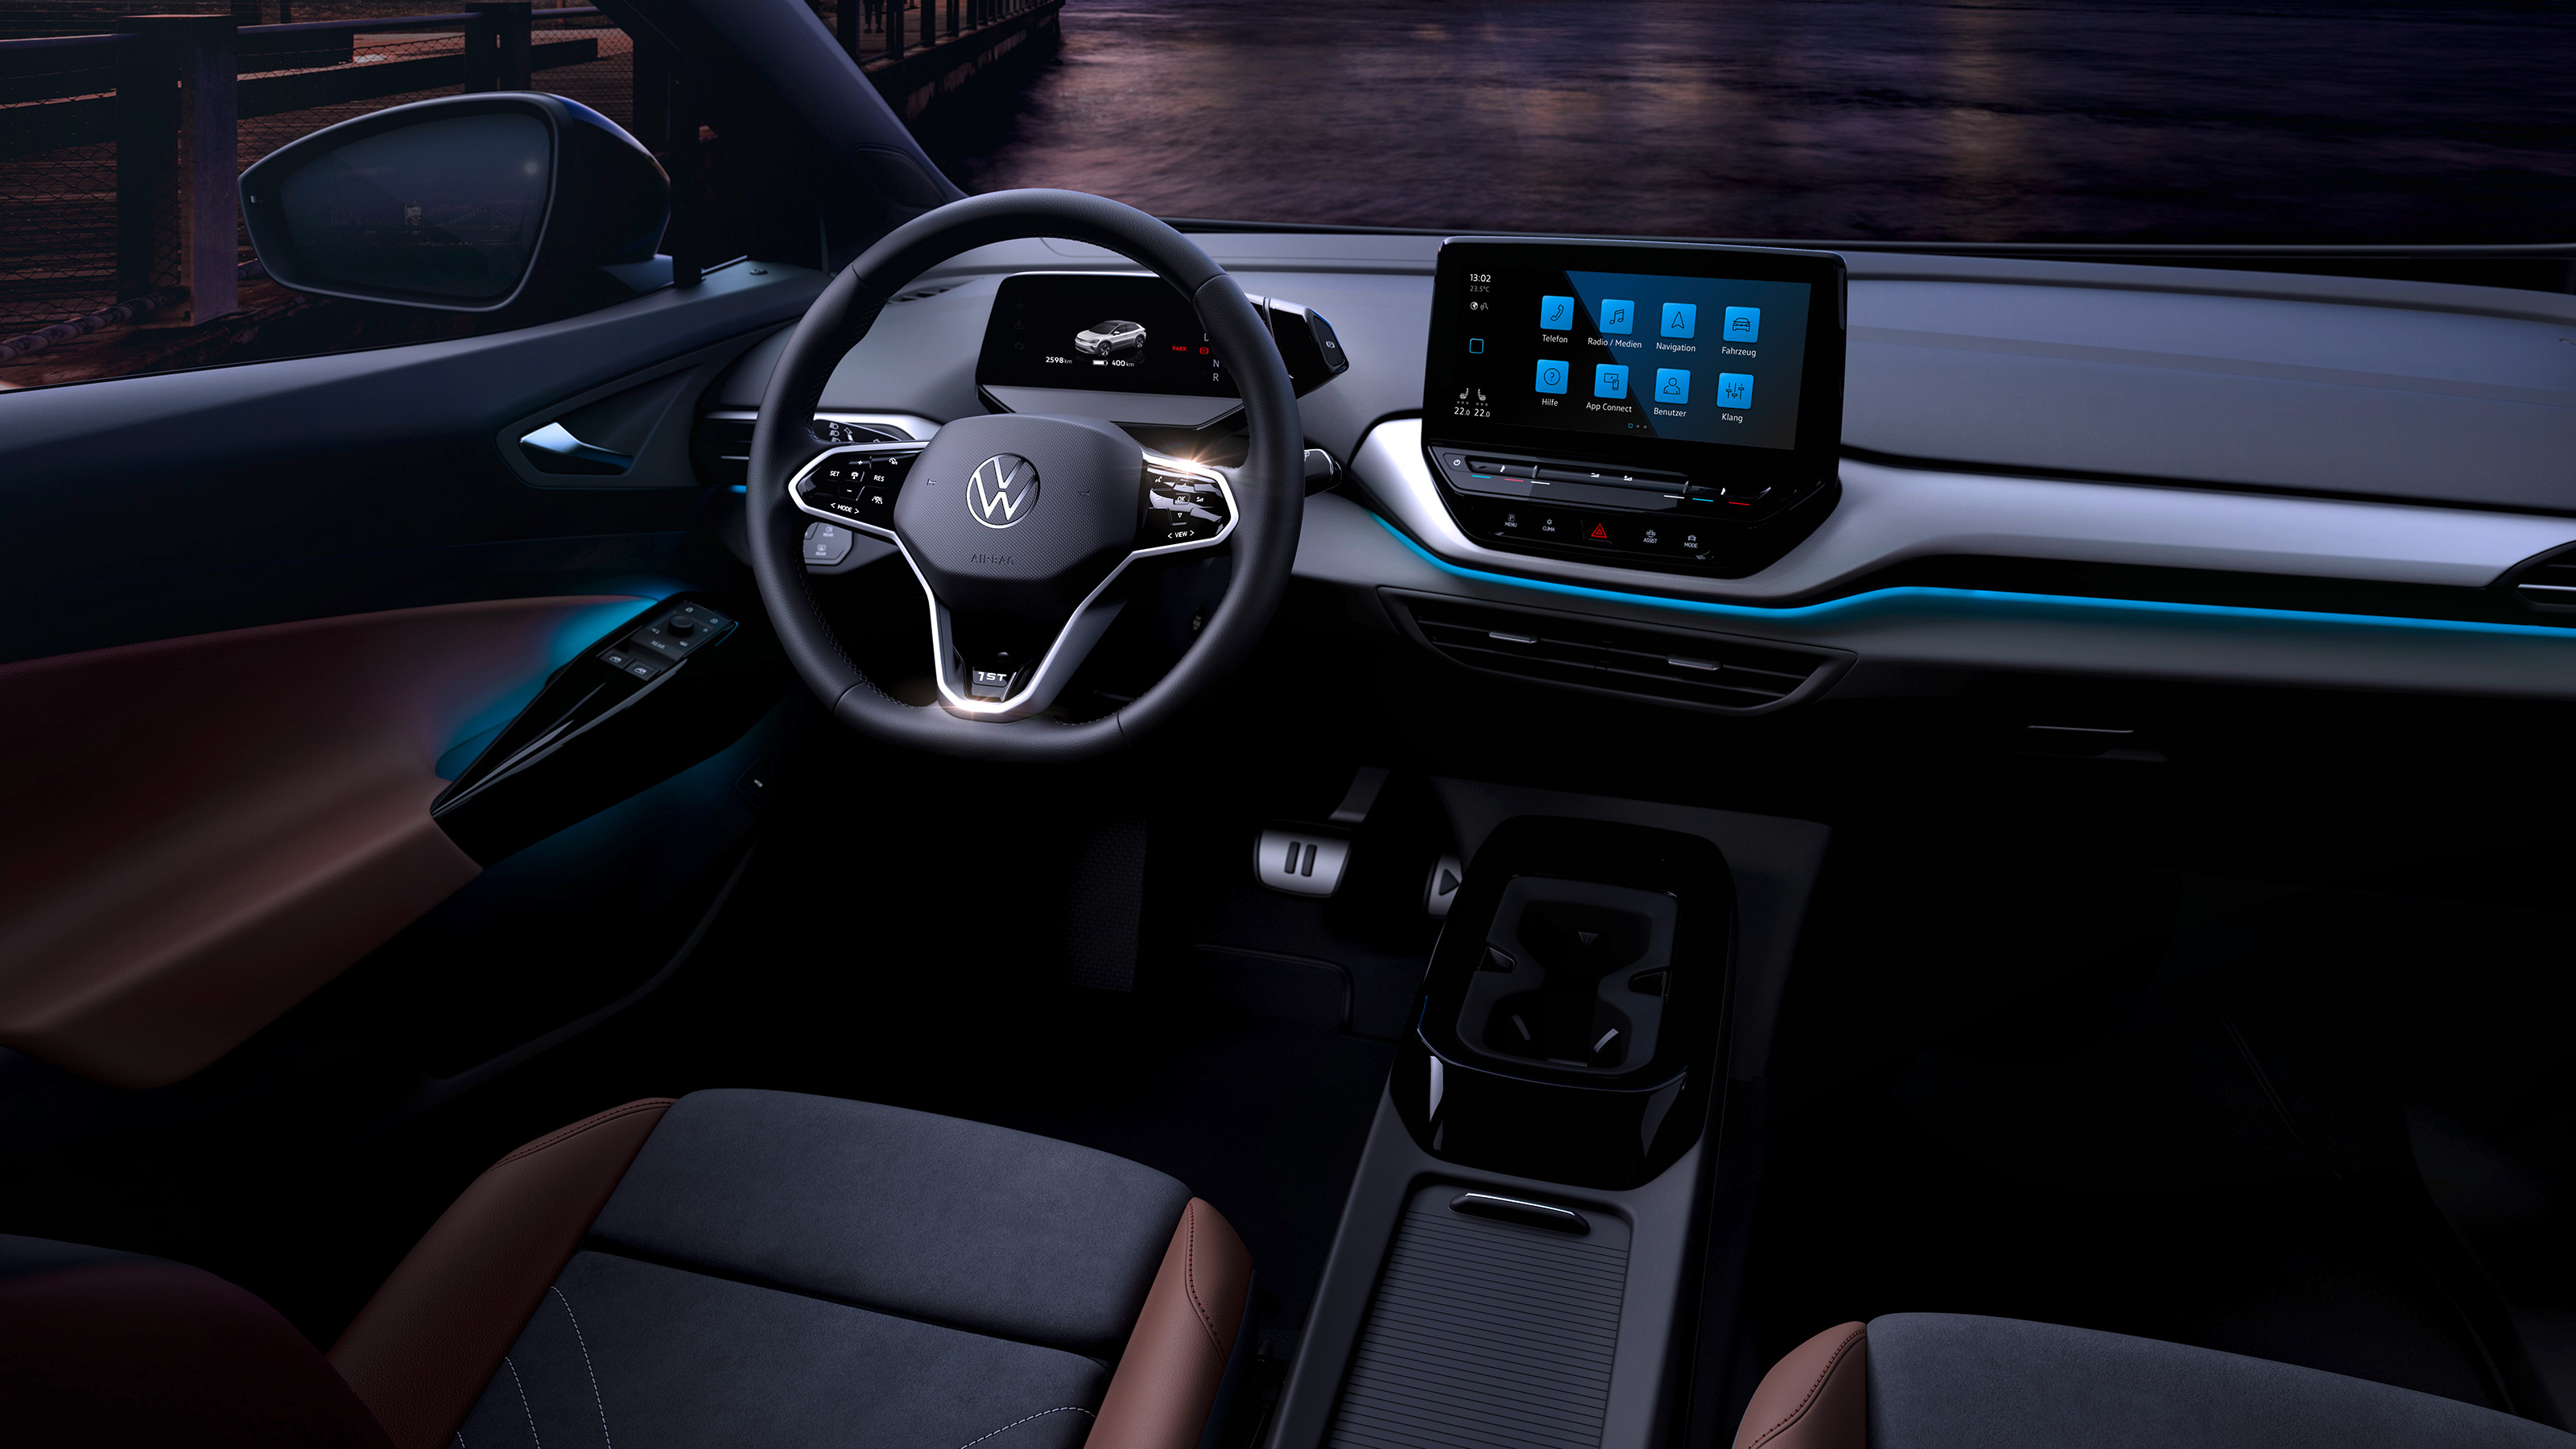 New 2021 Volkswagen ID.4 interior teased ahead of launch 